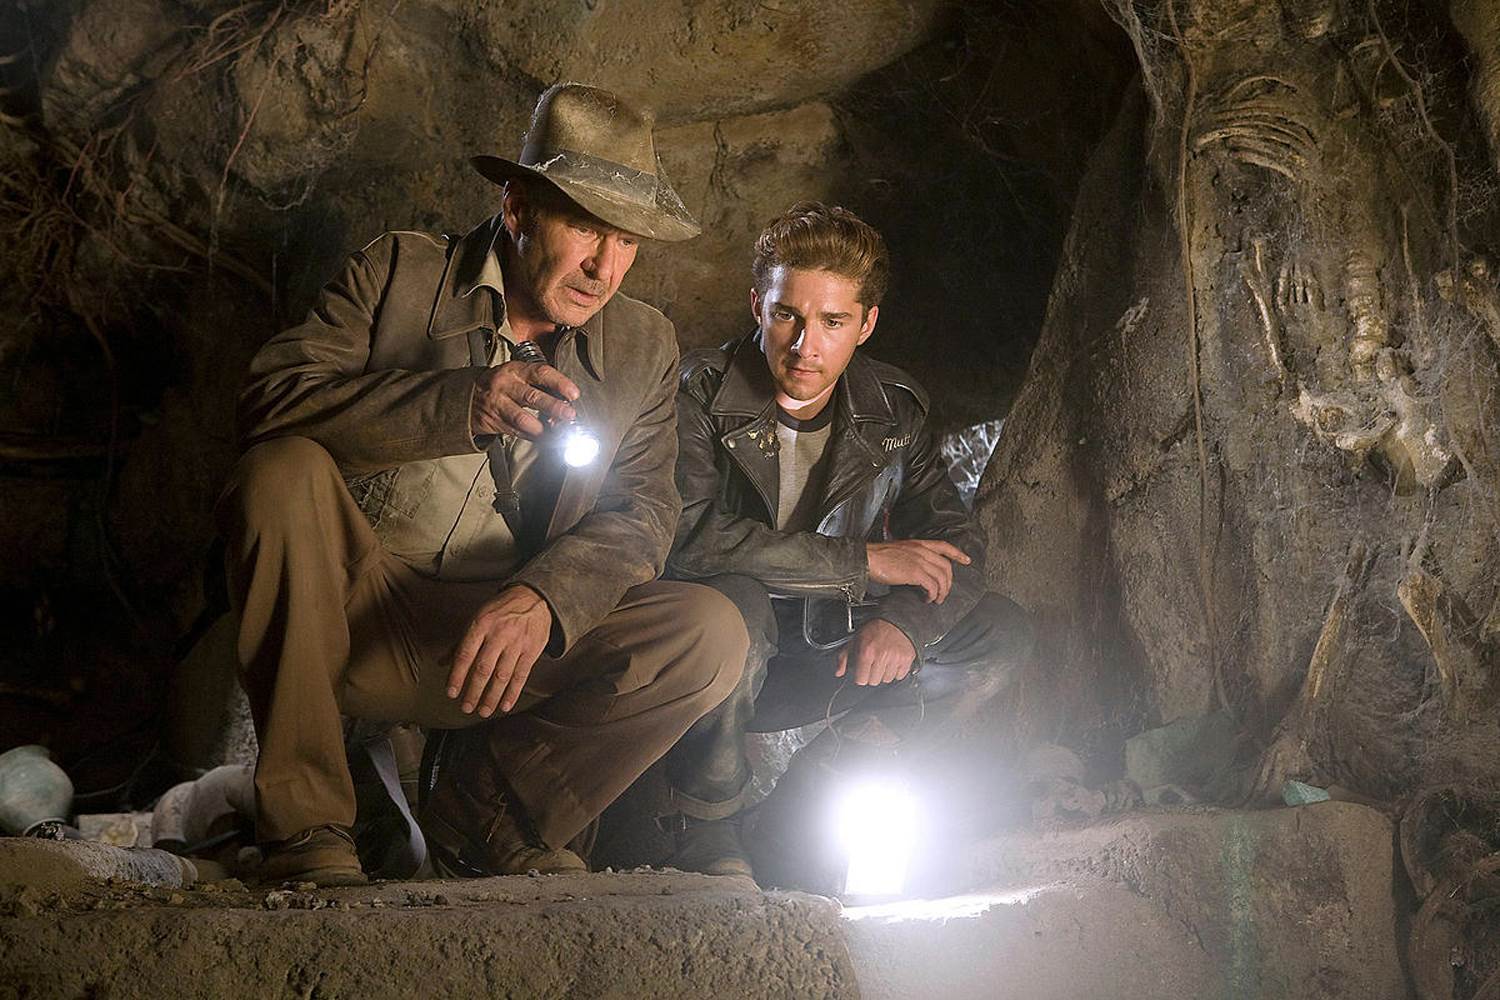 No Shia LeBeouf for Indiana Jones 5